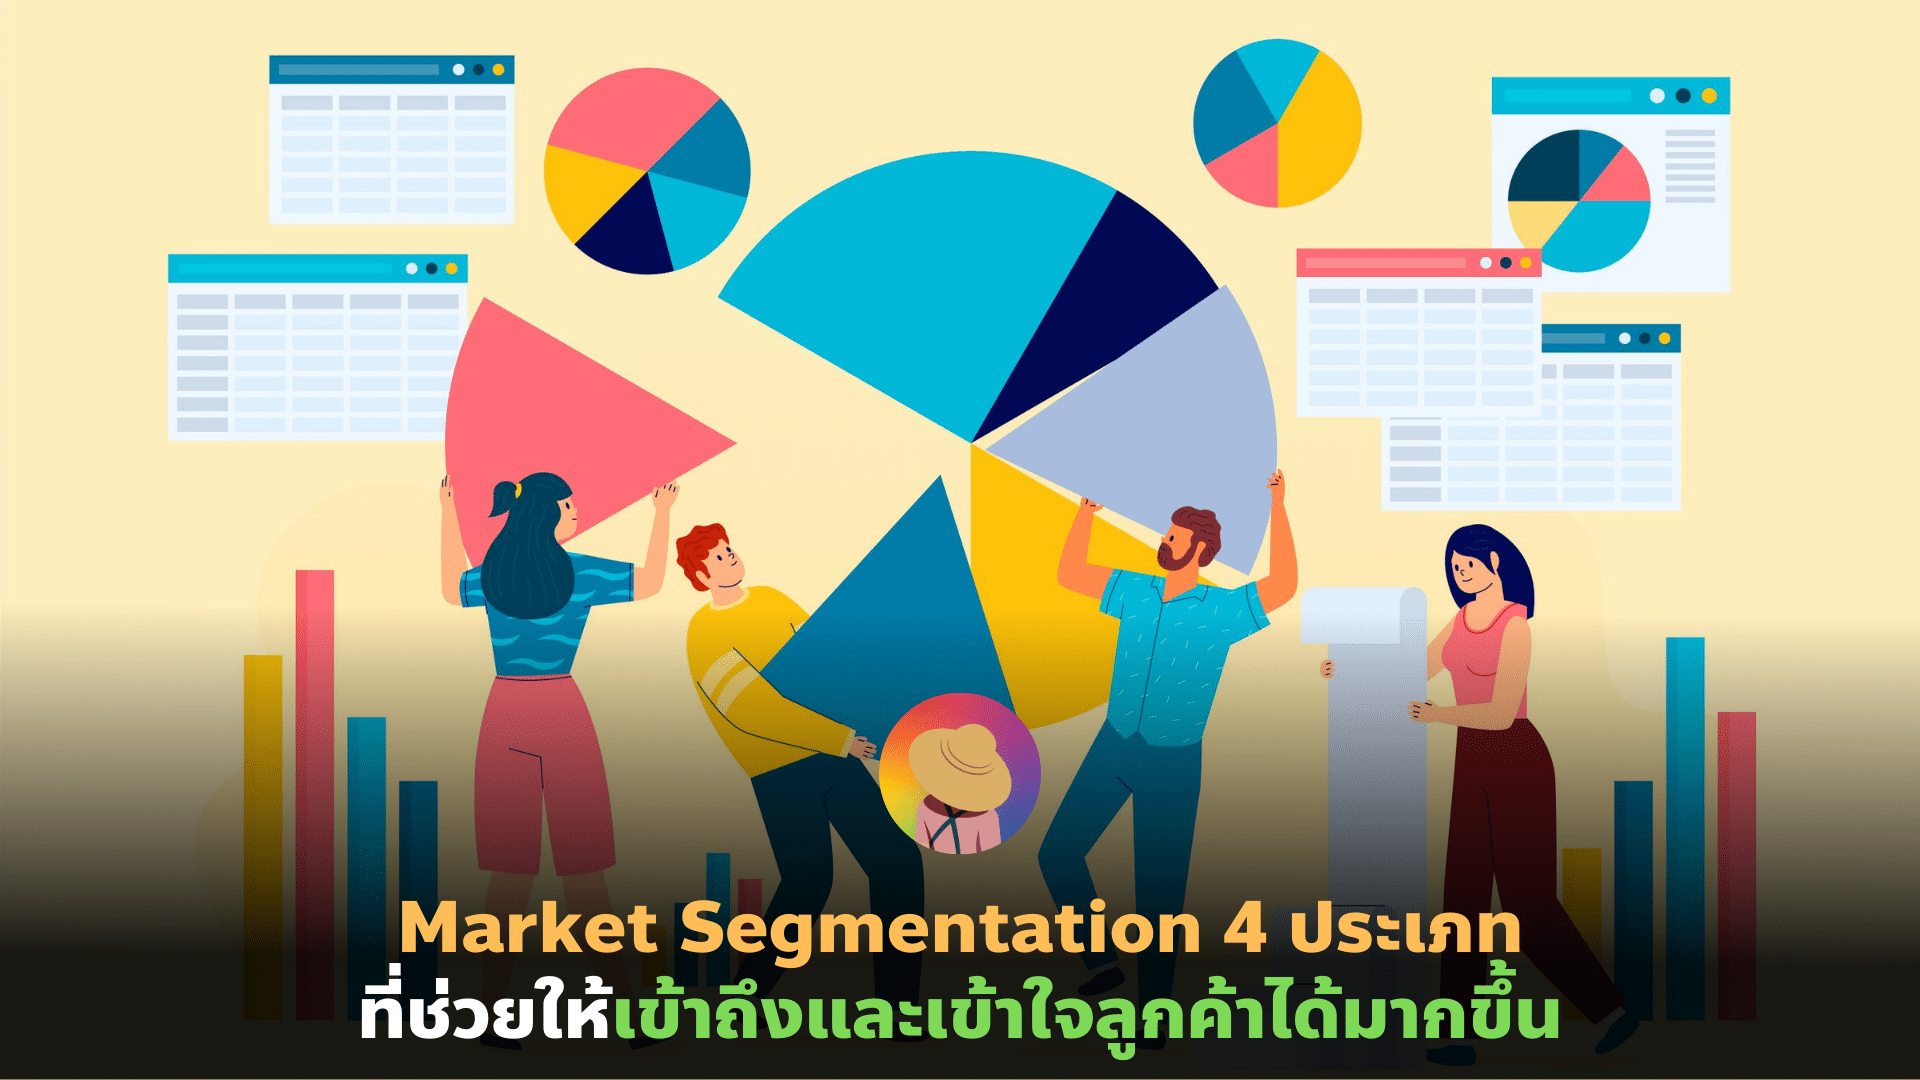 Market Segmentation 4 ประเภทที่ช่วยเข้าถึงและเข้าใจลูกค้าได้มากขึ้น